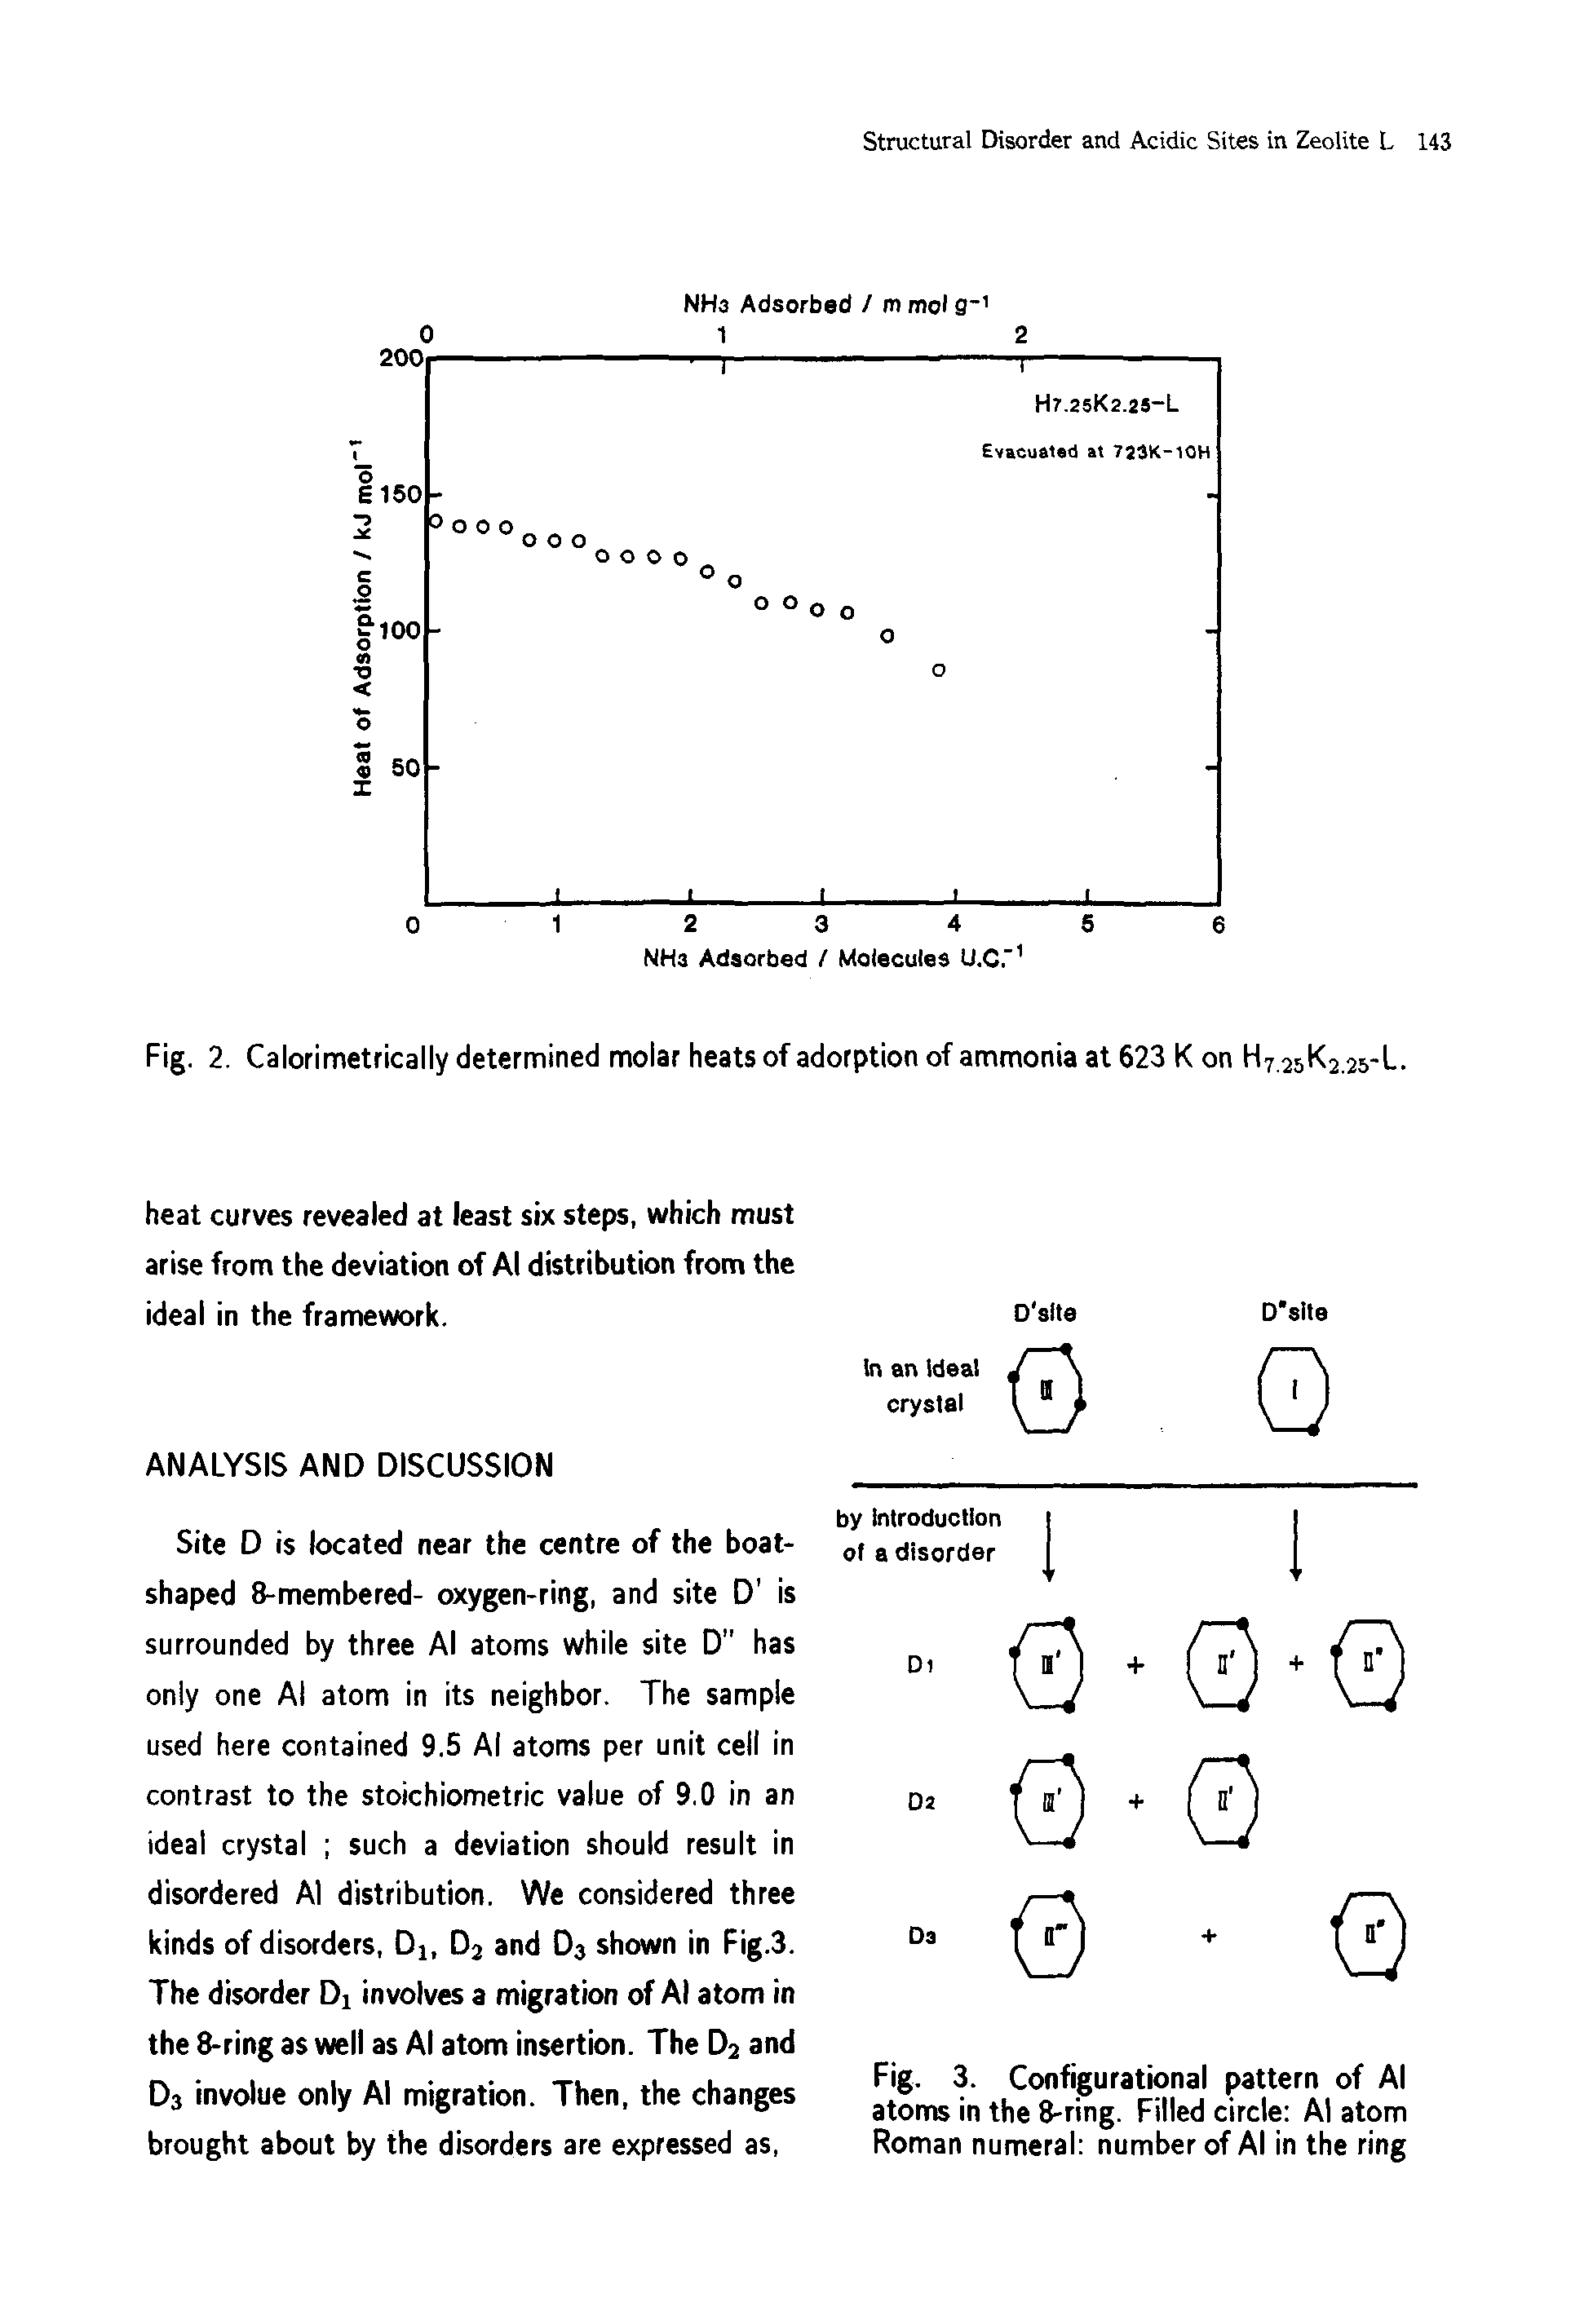 Fig. 2. Calorimetrically determined molar heats of adorption of ammonia at 623 K on H7 25K2.25-L.